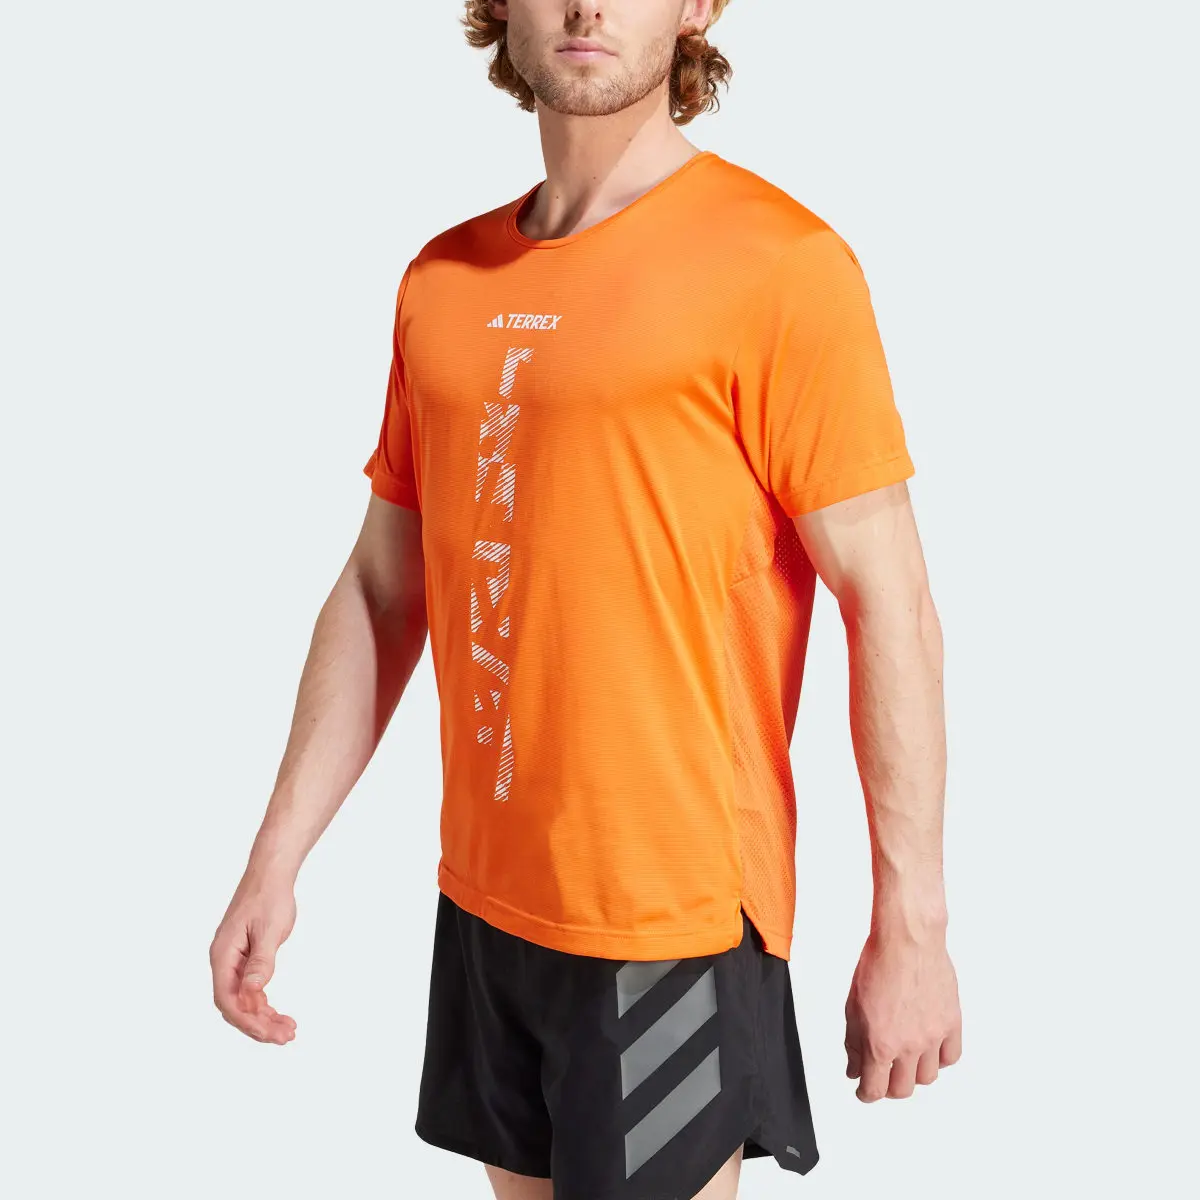 Adidas T-shirt Terrex Agravic Trail Running. 1